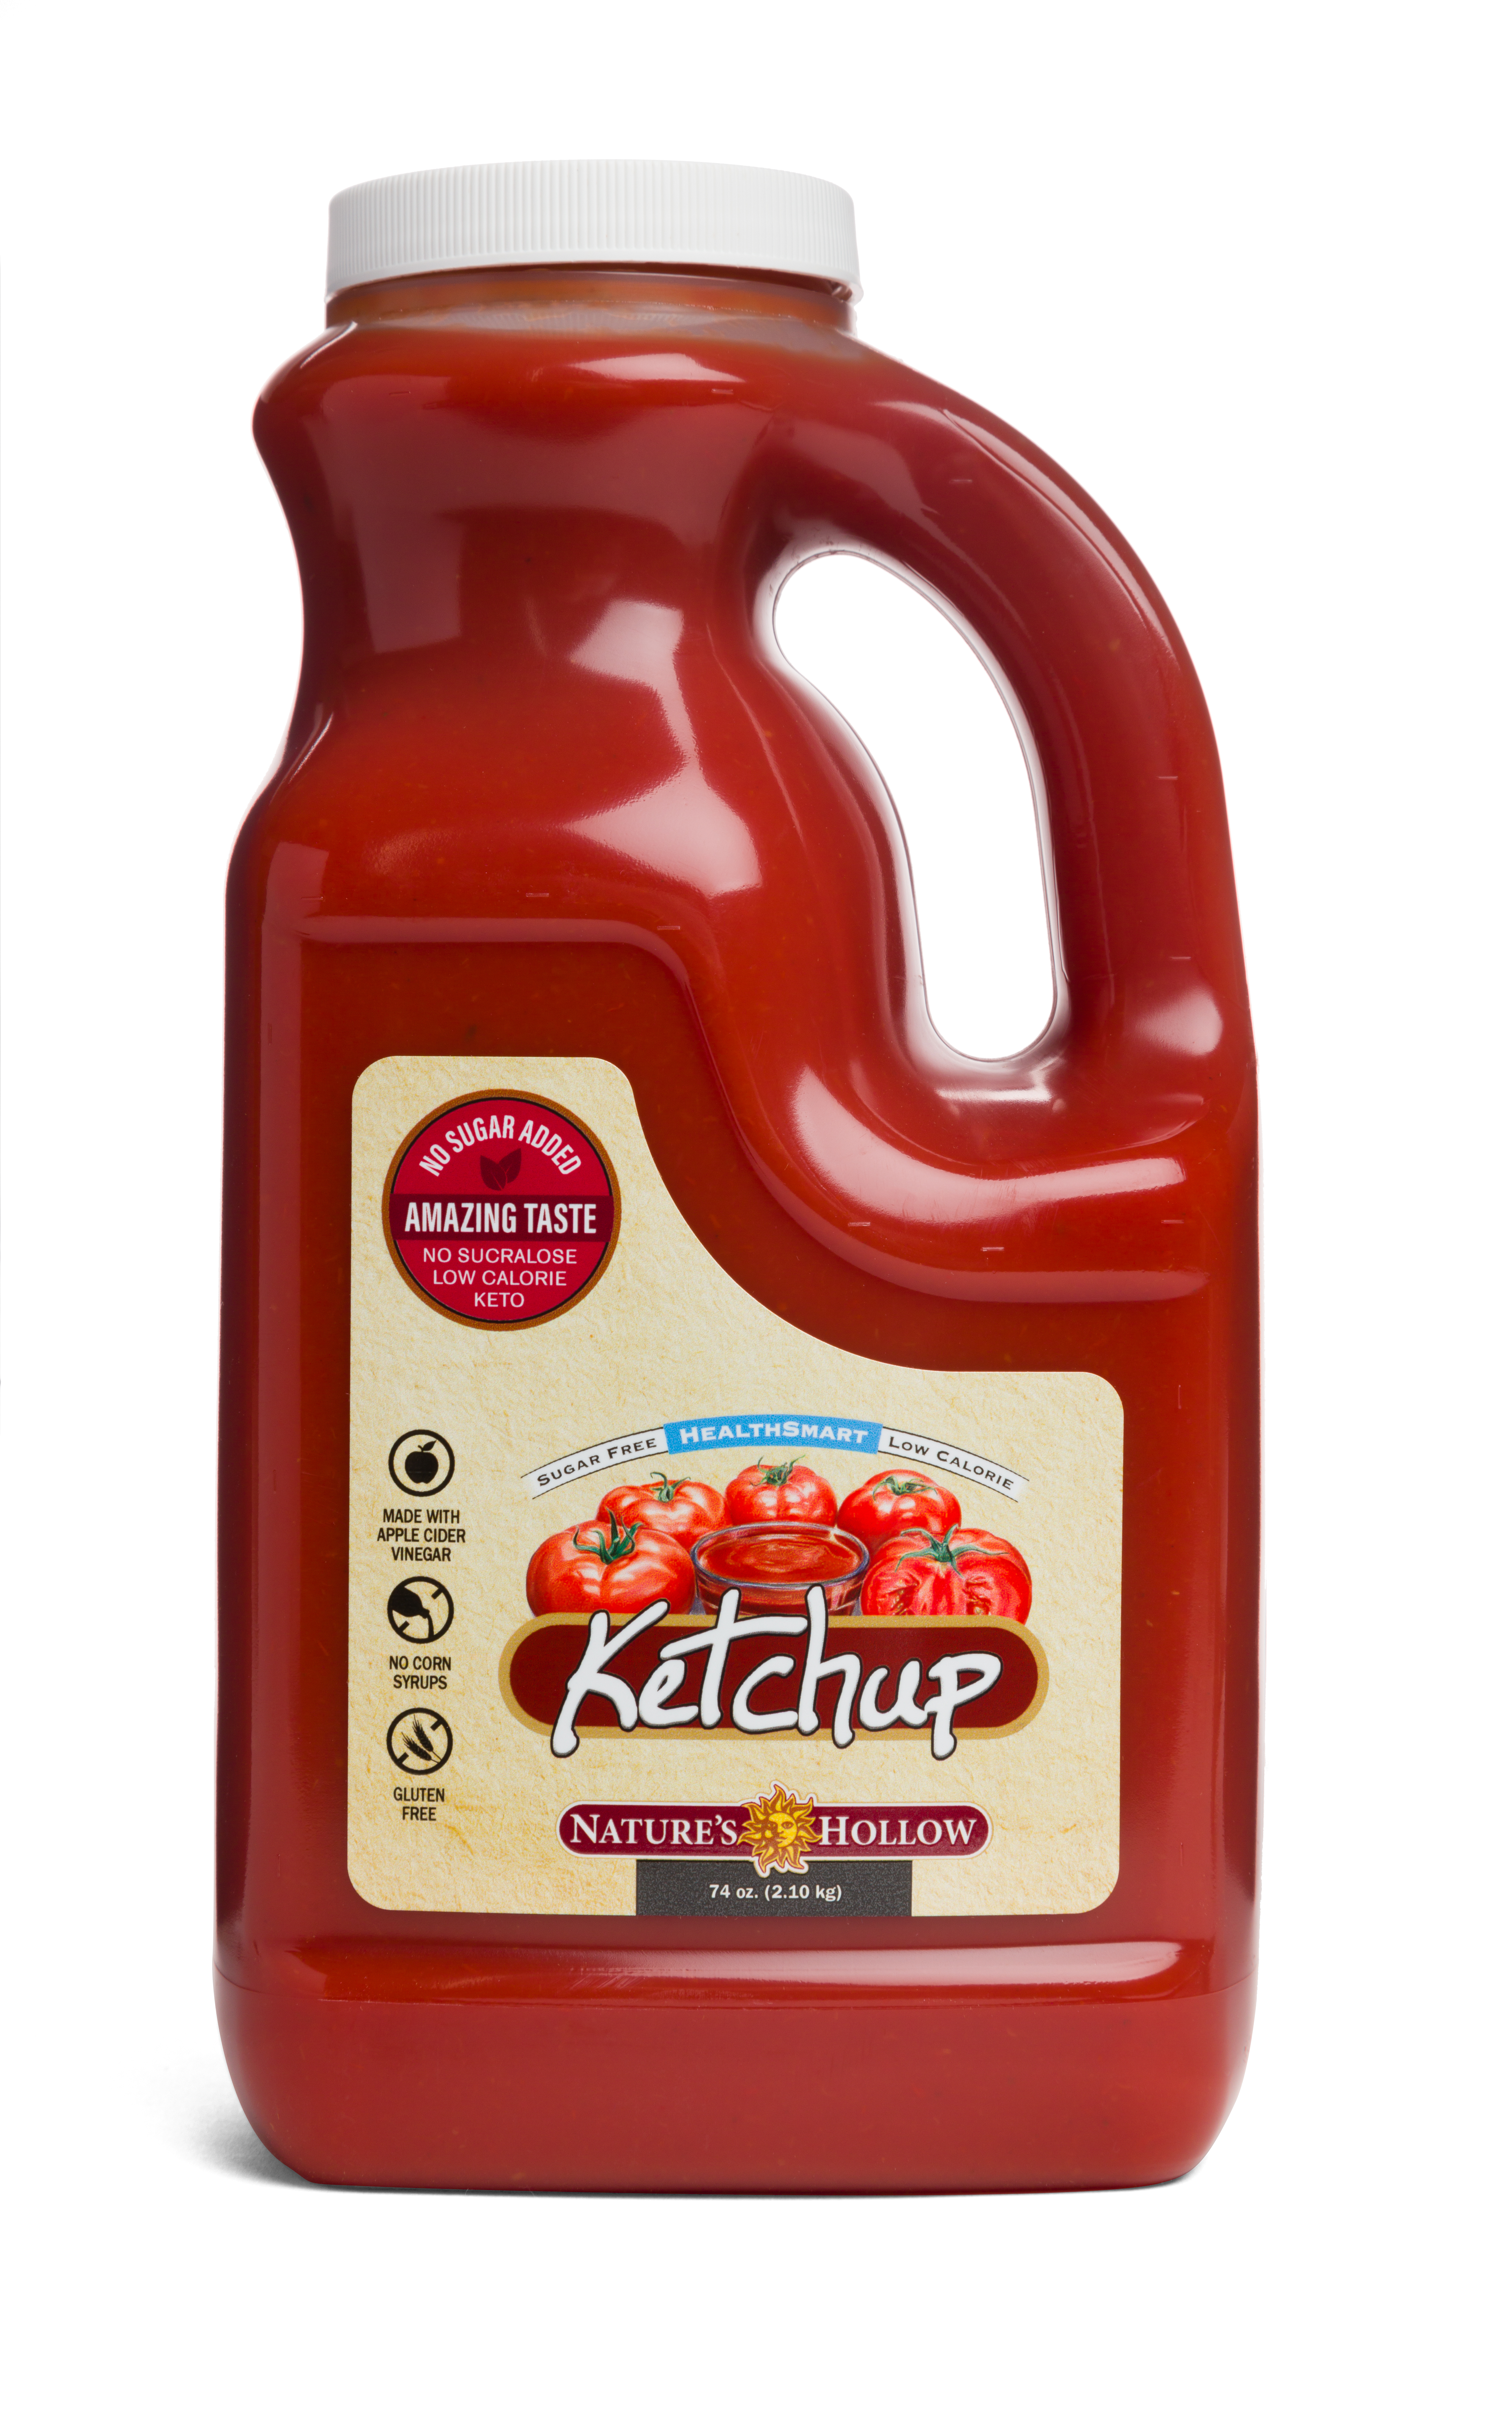 Nature's Hollow HealthSmart® Ketchup (Food Service) 6 units per case 74.0 oz